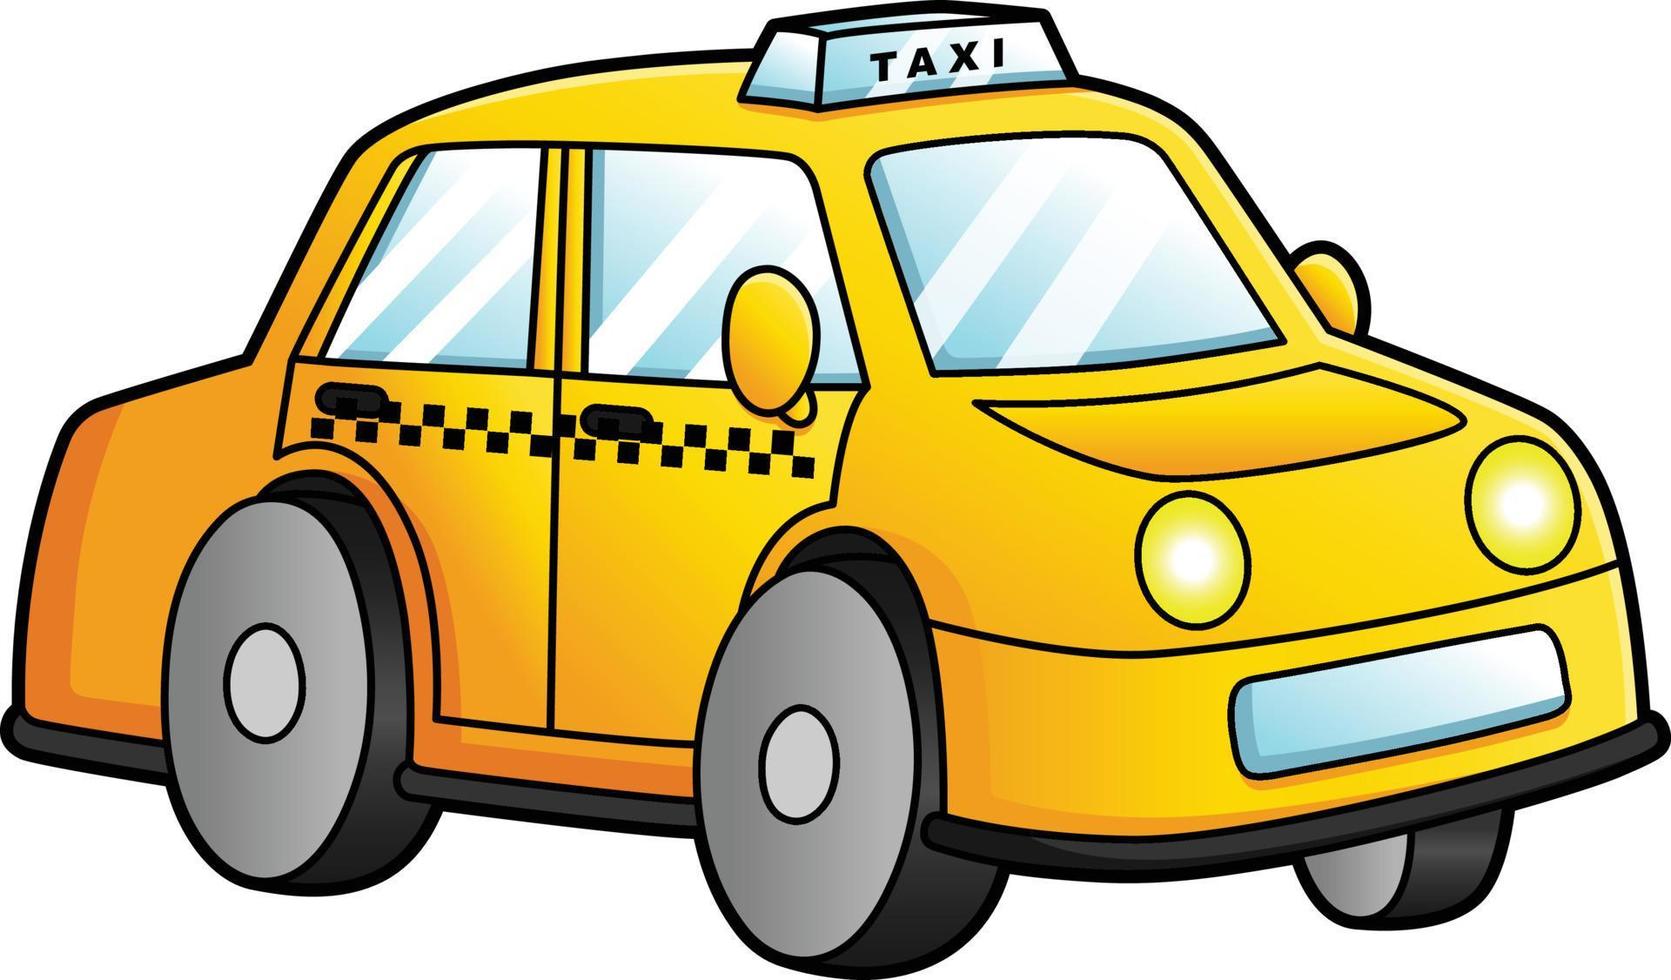 Taxi Cartoon Clipart Colored Illustration vector